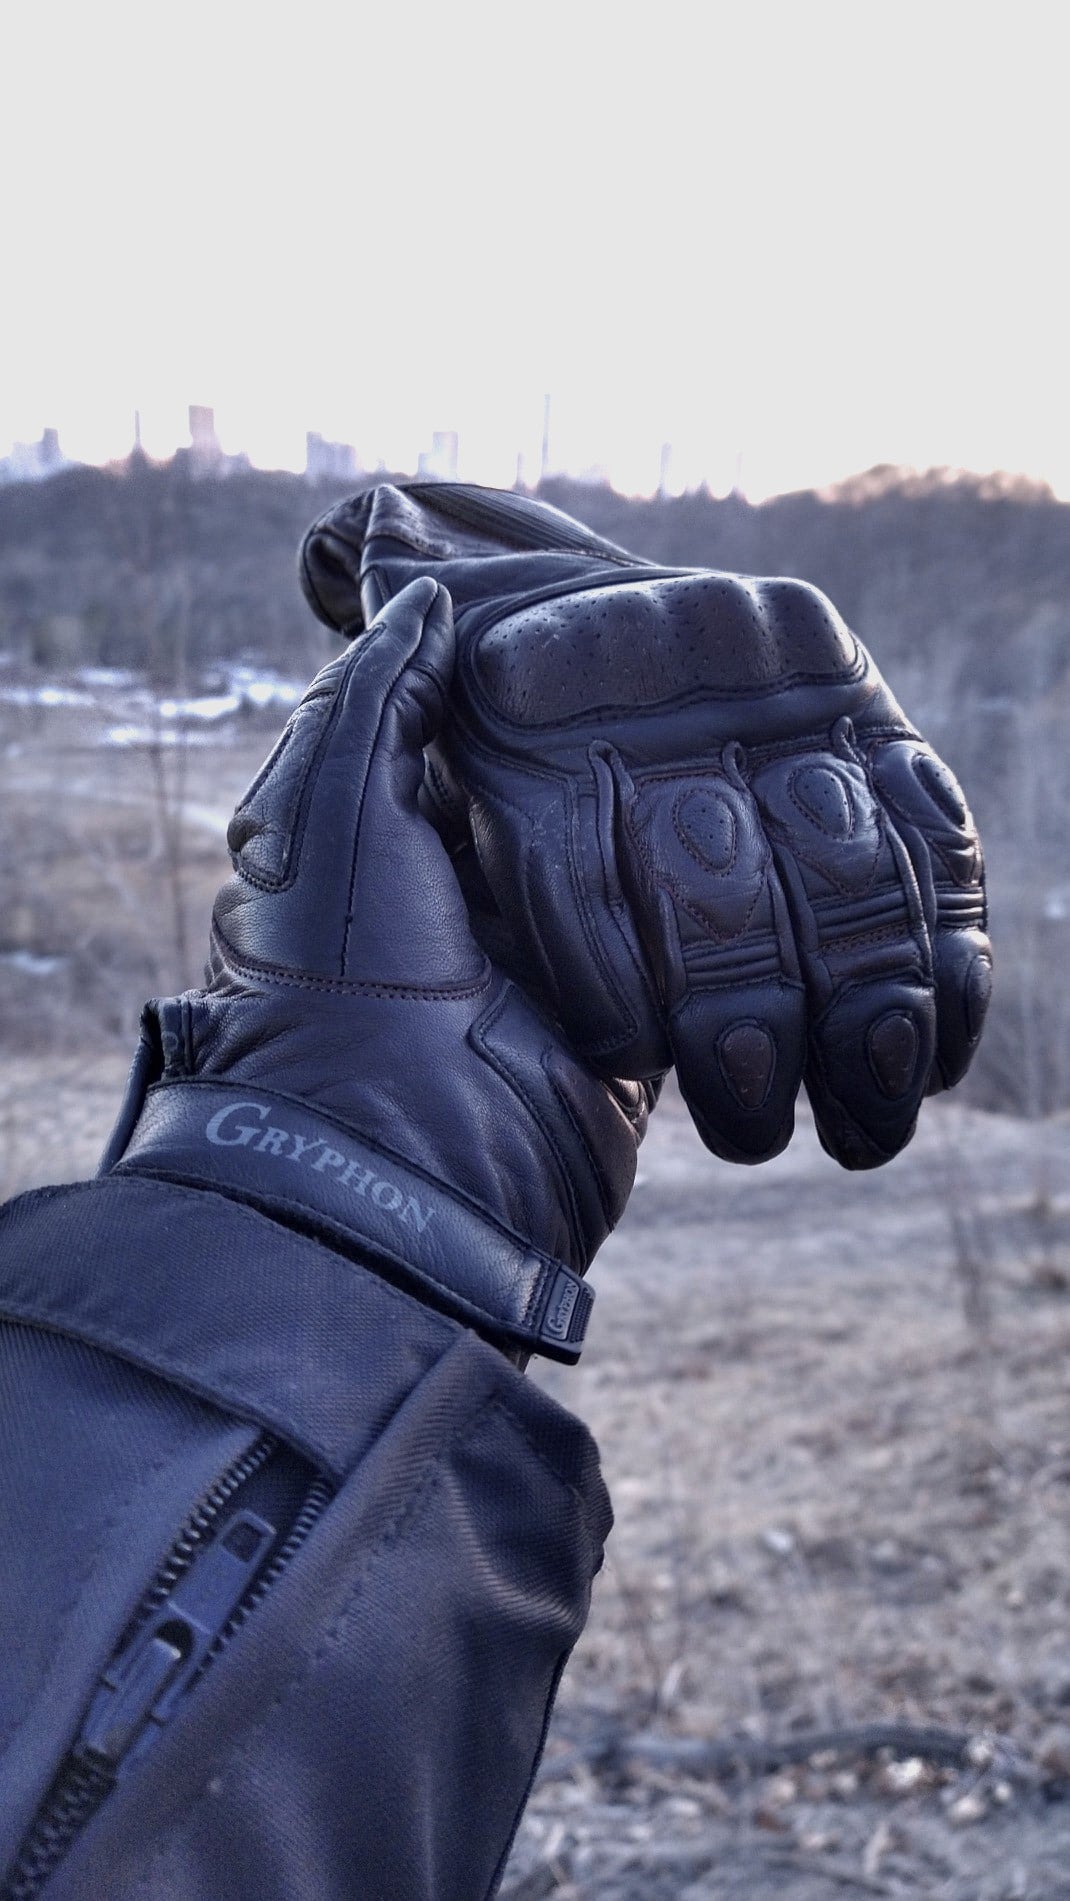 GRYPHON Cabot Leather Gloves - BLACK